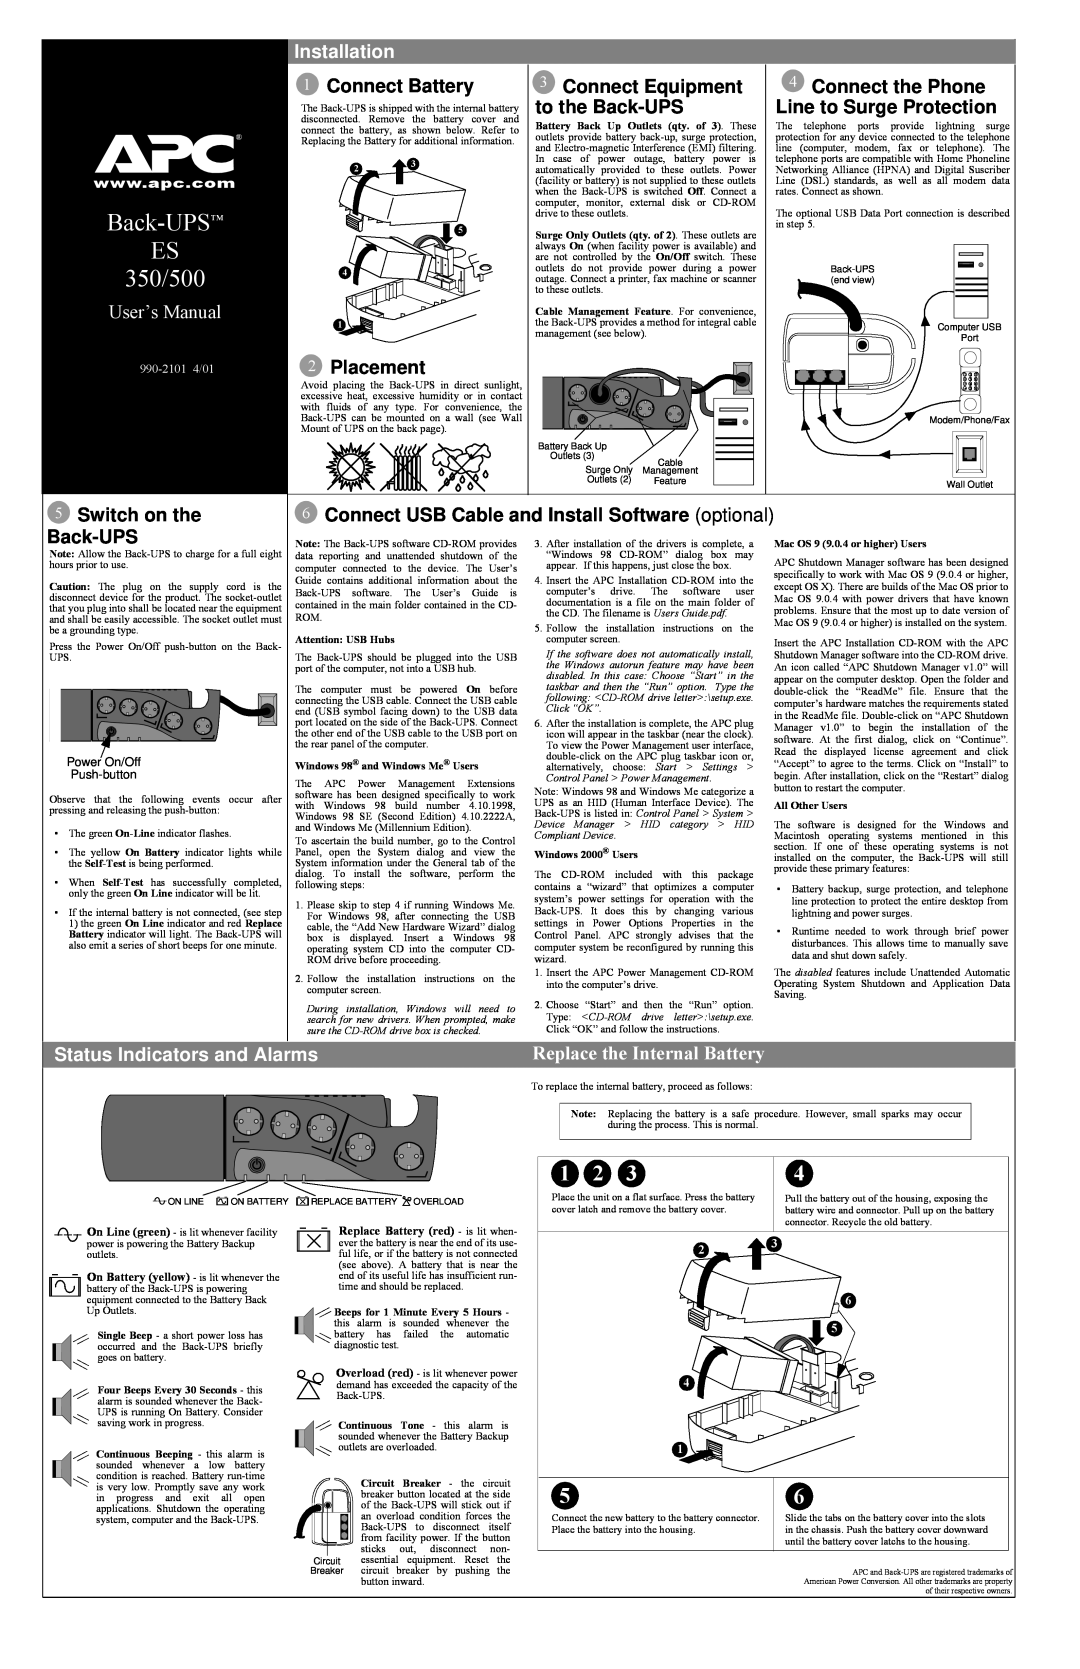 American Power Conversion user manual Installation, Status Indicators and Alarms, Back-UPS ES 350/500, User’s Manual 